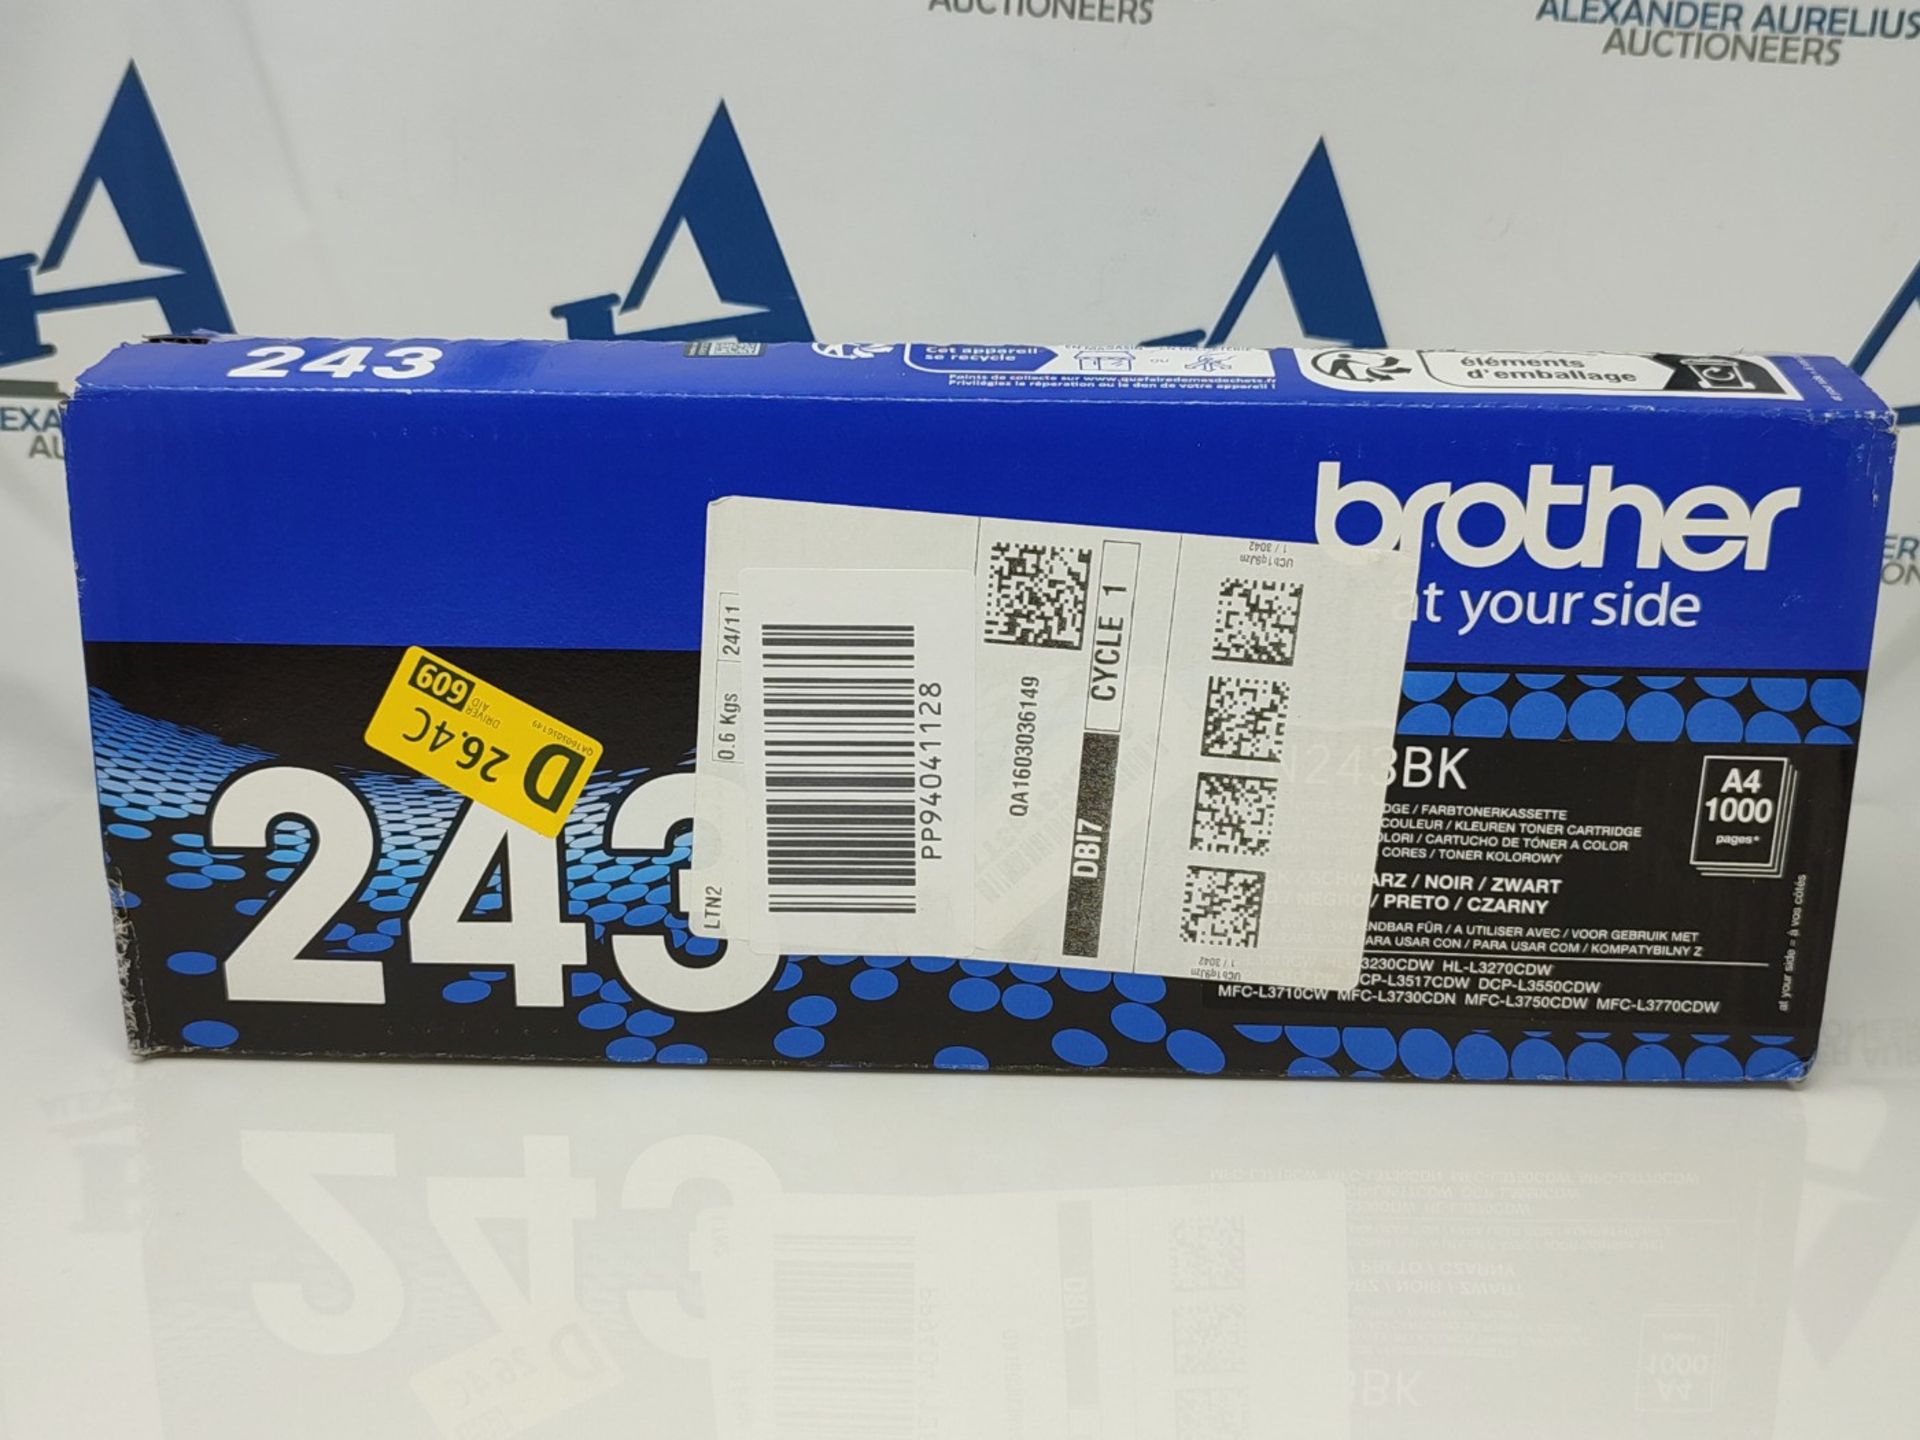 Brother TN-243BK Toner Cartridge, Black, Single Pack, Standard Yield, Includes 1 x Ton - Image 2 of 3